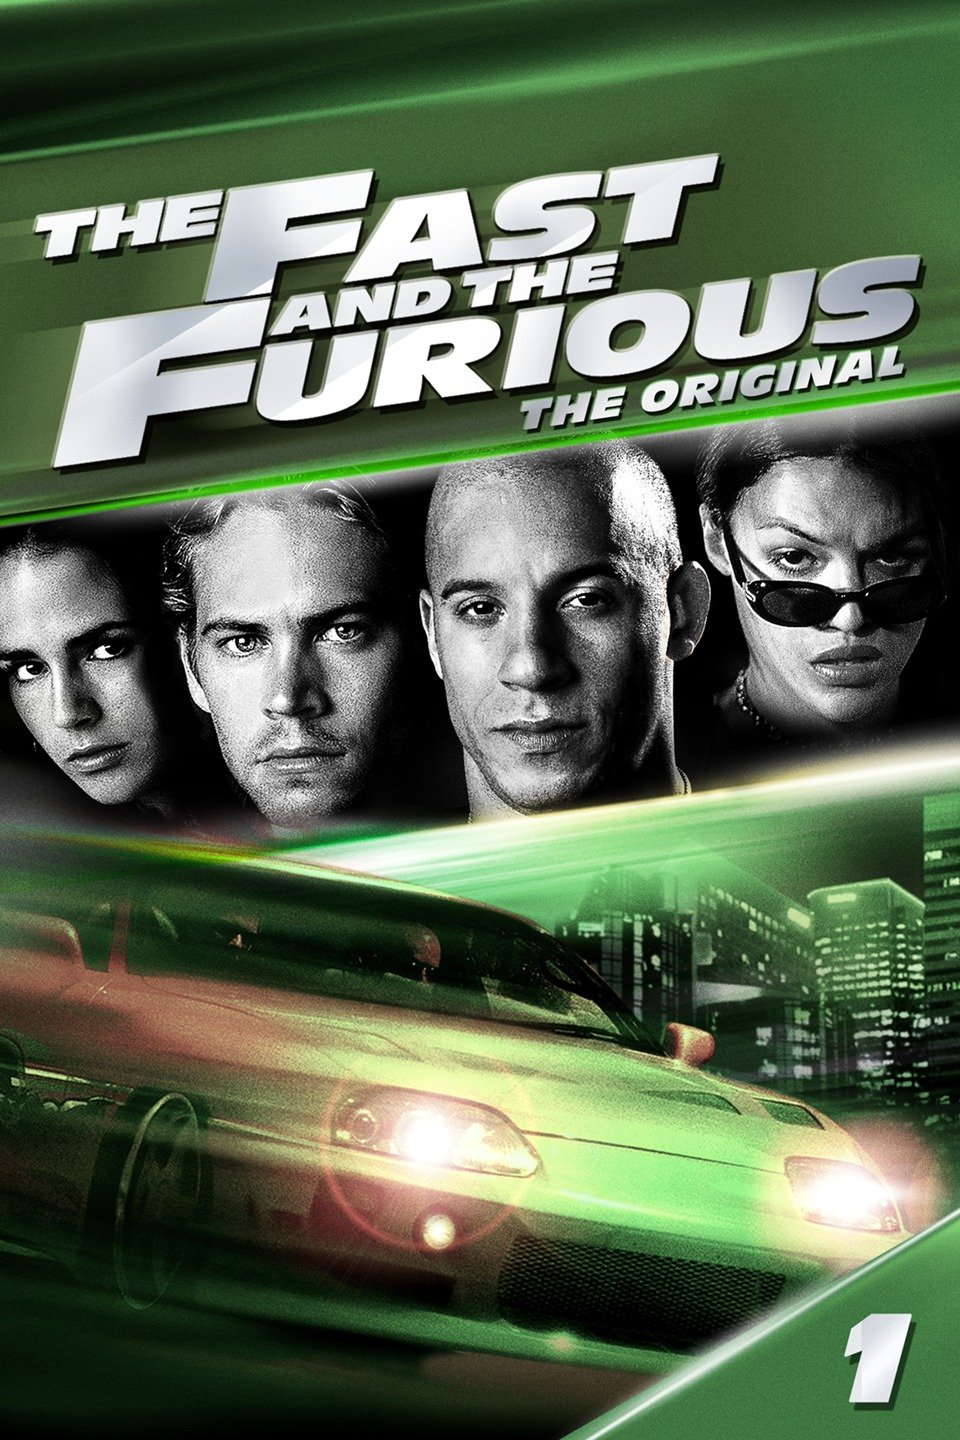 [Mini-HD] The Fast and the Furious (2001) เร็วแรงทะลุนรก ภาค 1 [MASTER] [1080P] [BluRay.DTS.x264] [พากย์ไทย DTS + อังกฤษ DTS] [บรรยายไทย + อังกฤษ] [เสียงไทย + ซับไทย]